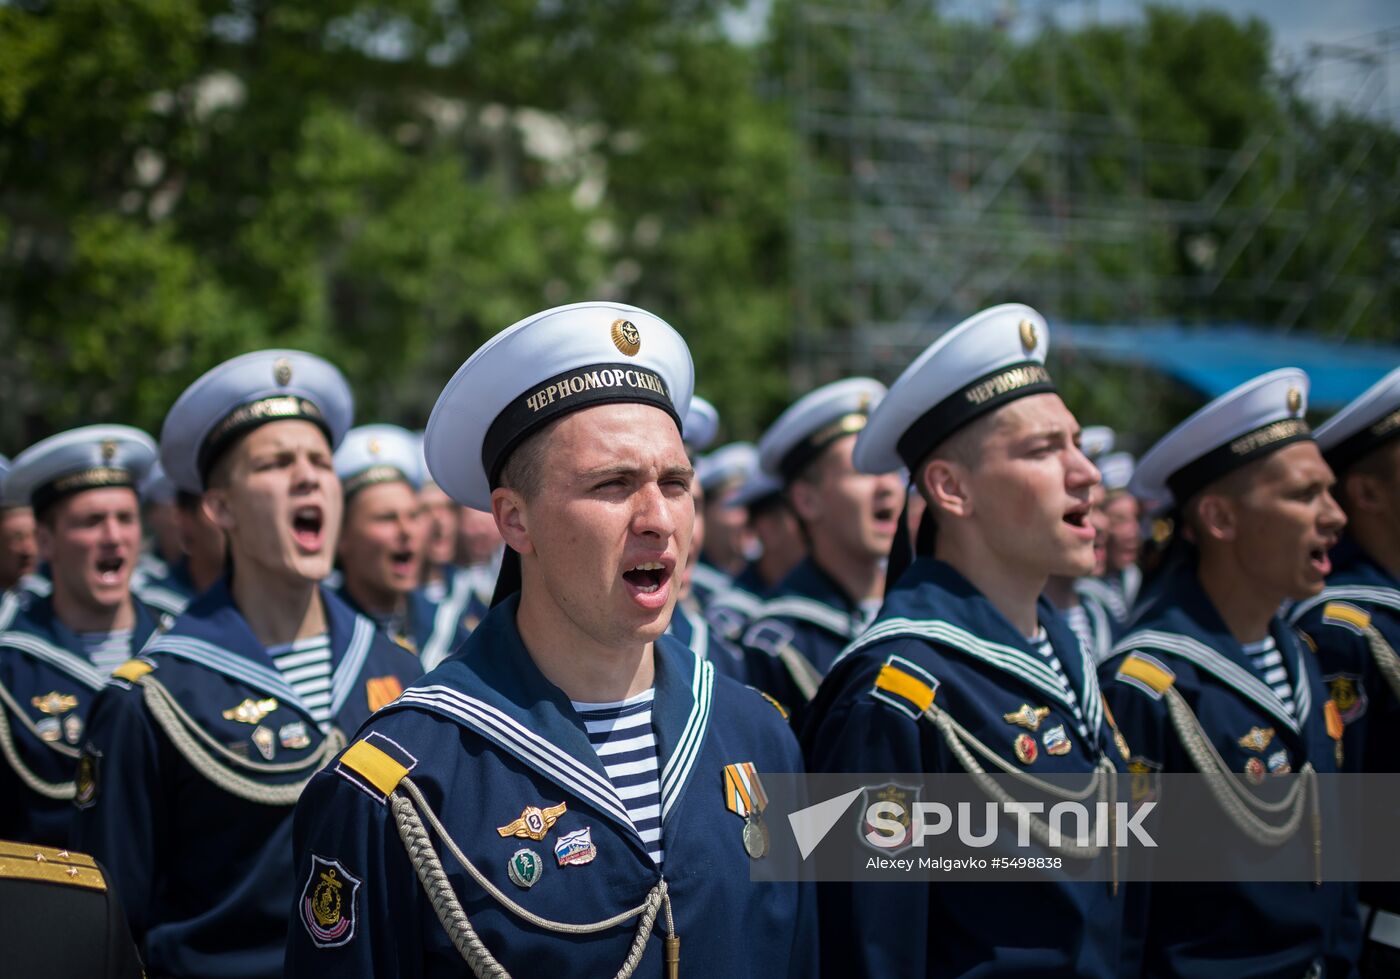 celebrations to mark Black Sea Fleet's 235th anniversary